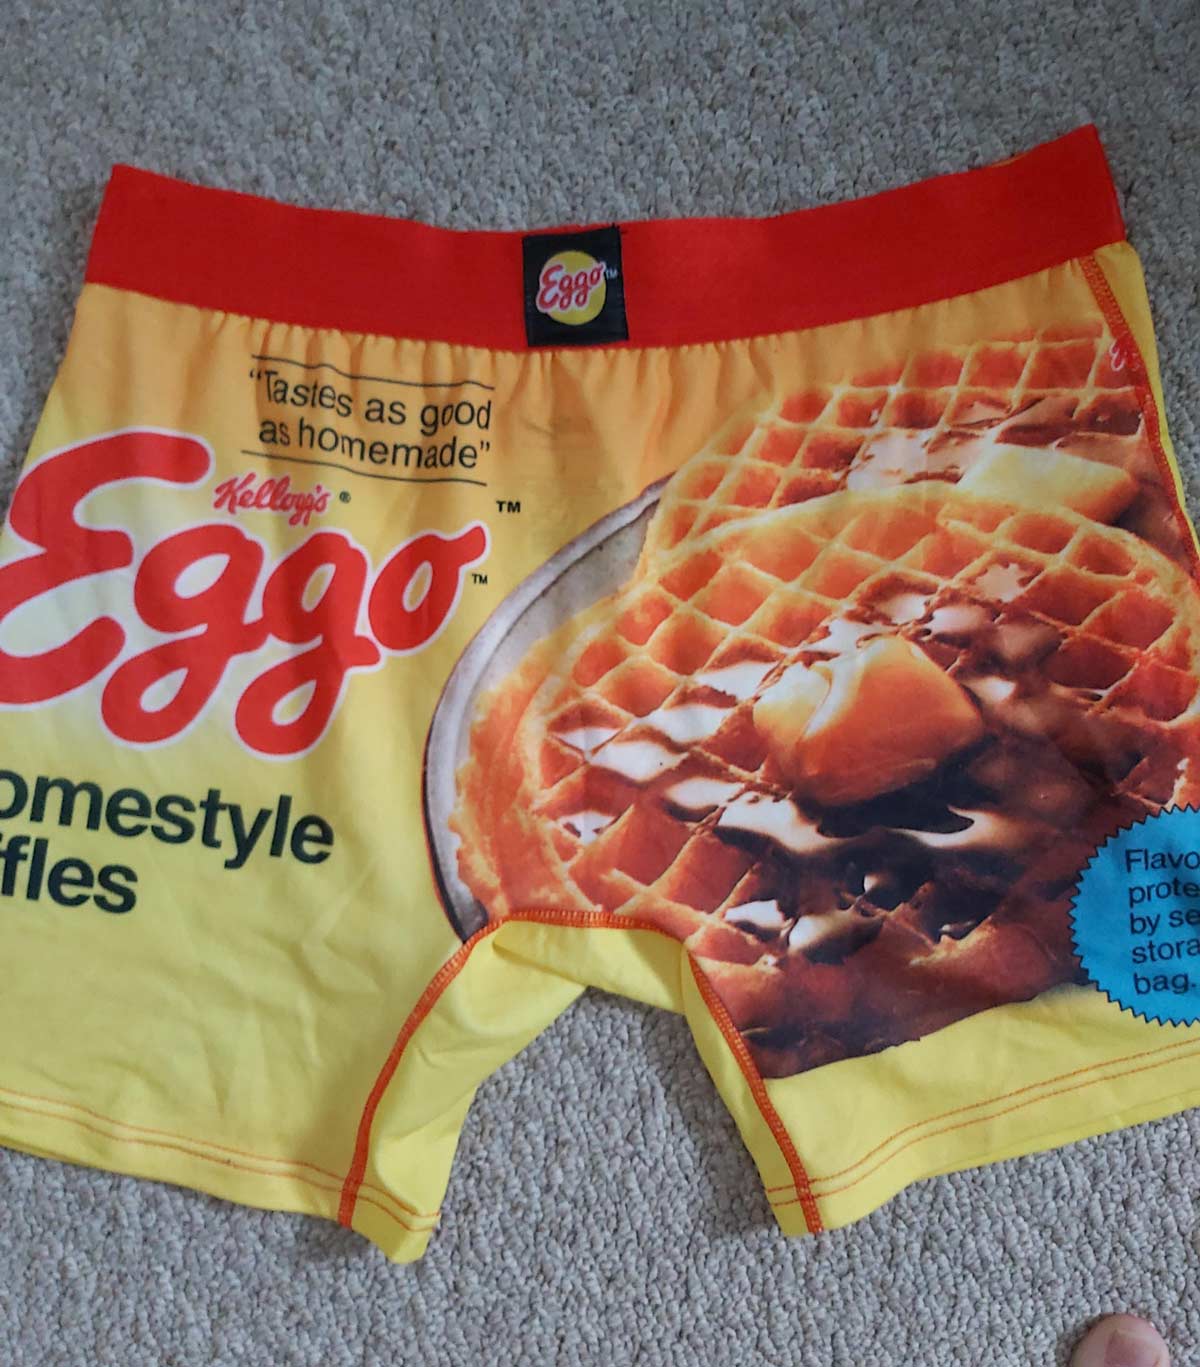 Someone gifted me eggo waffles underwear